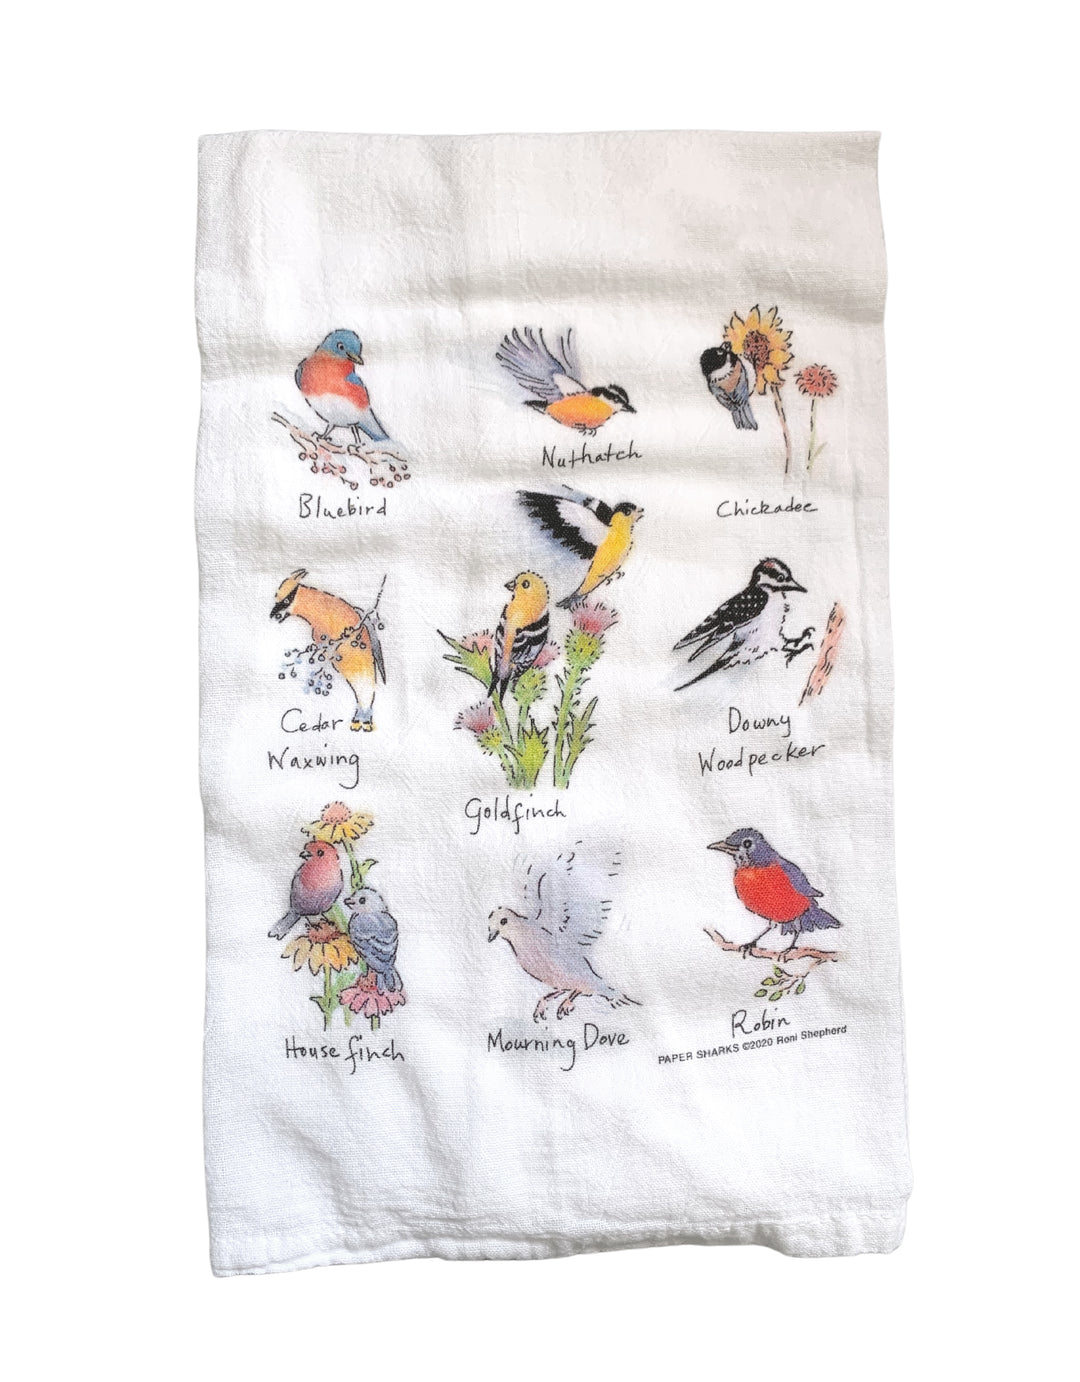 BACKYARD BIRDS - Kingfisher Road - Online Boutique